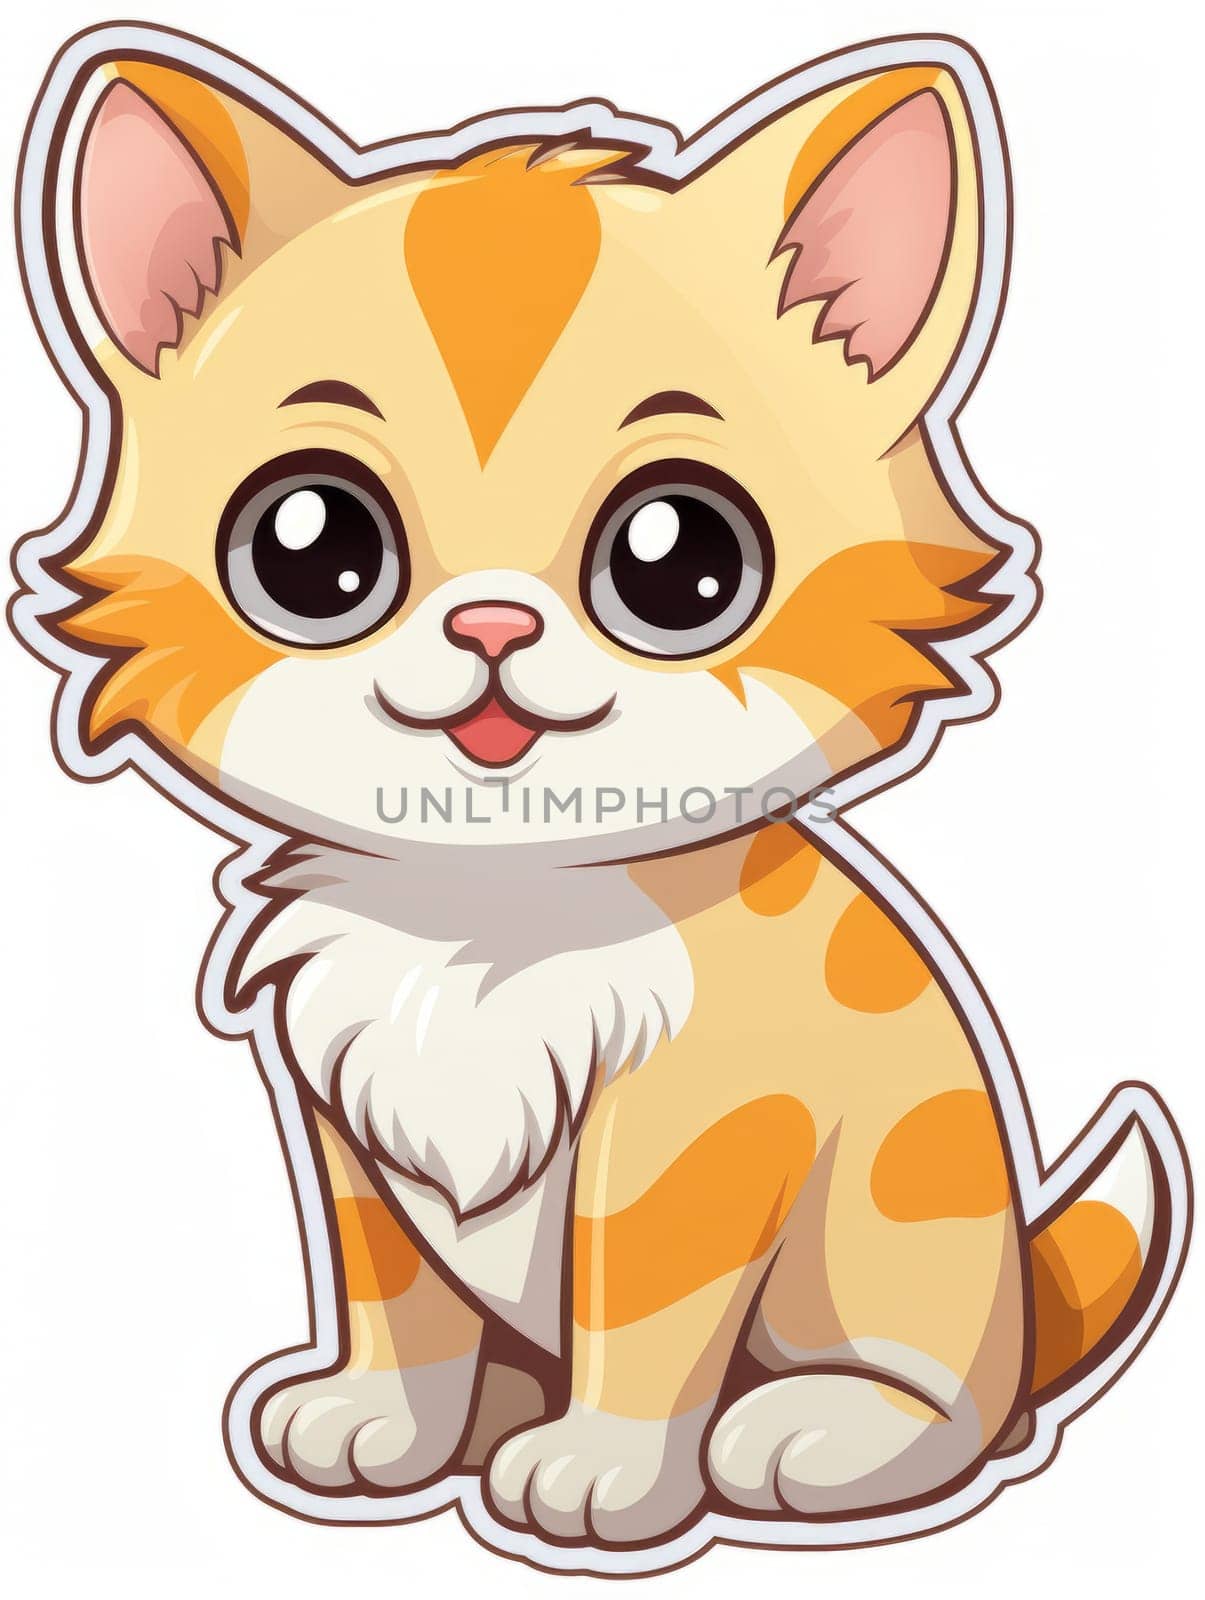 Cartoon kitten sticker. Cute drawn illustration of a cat with big eyes AI